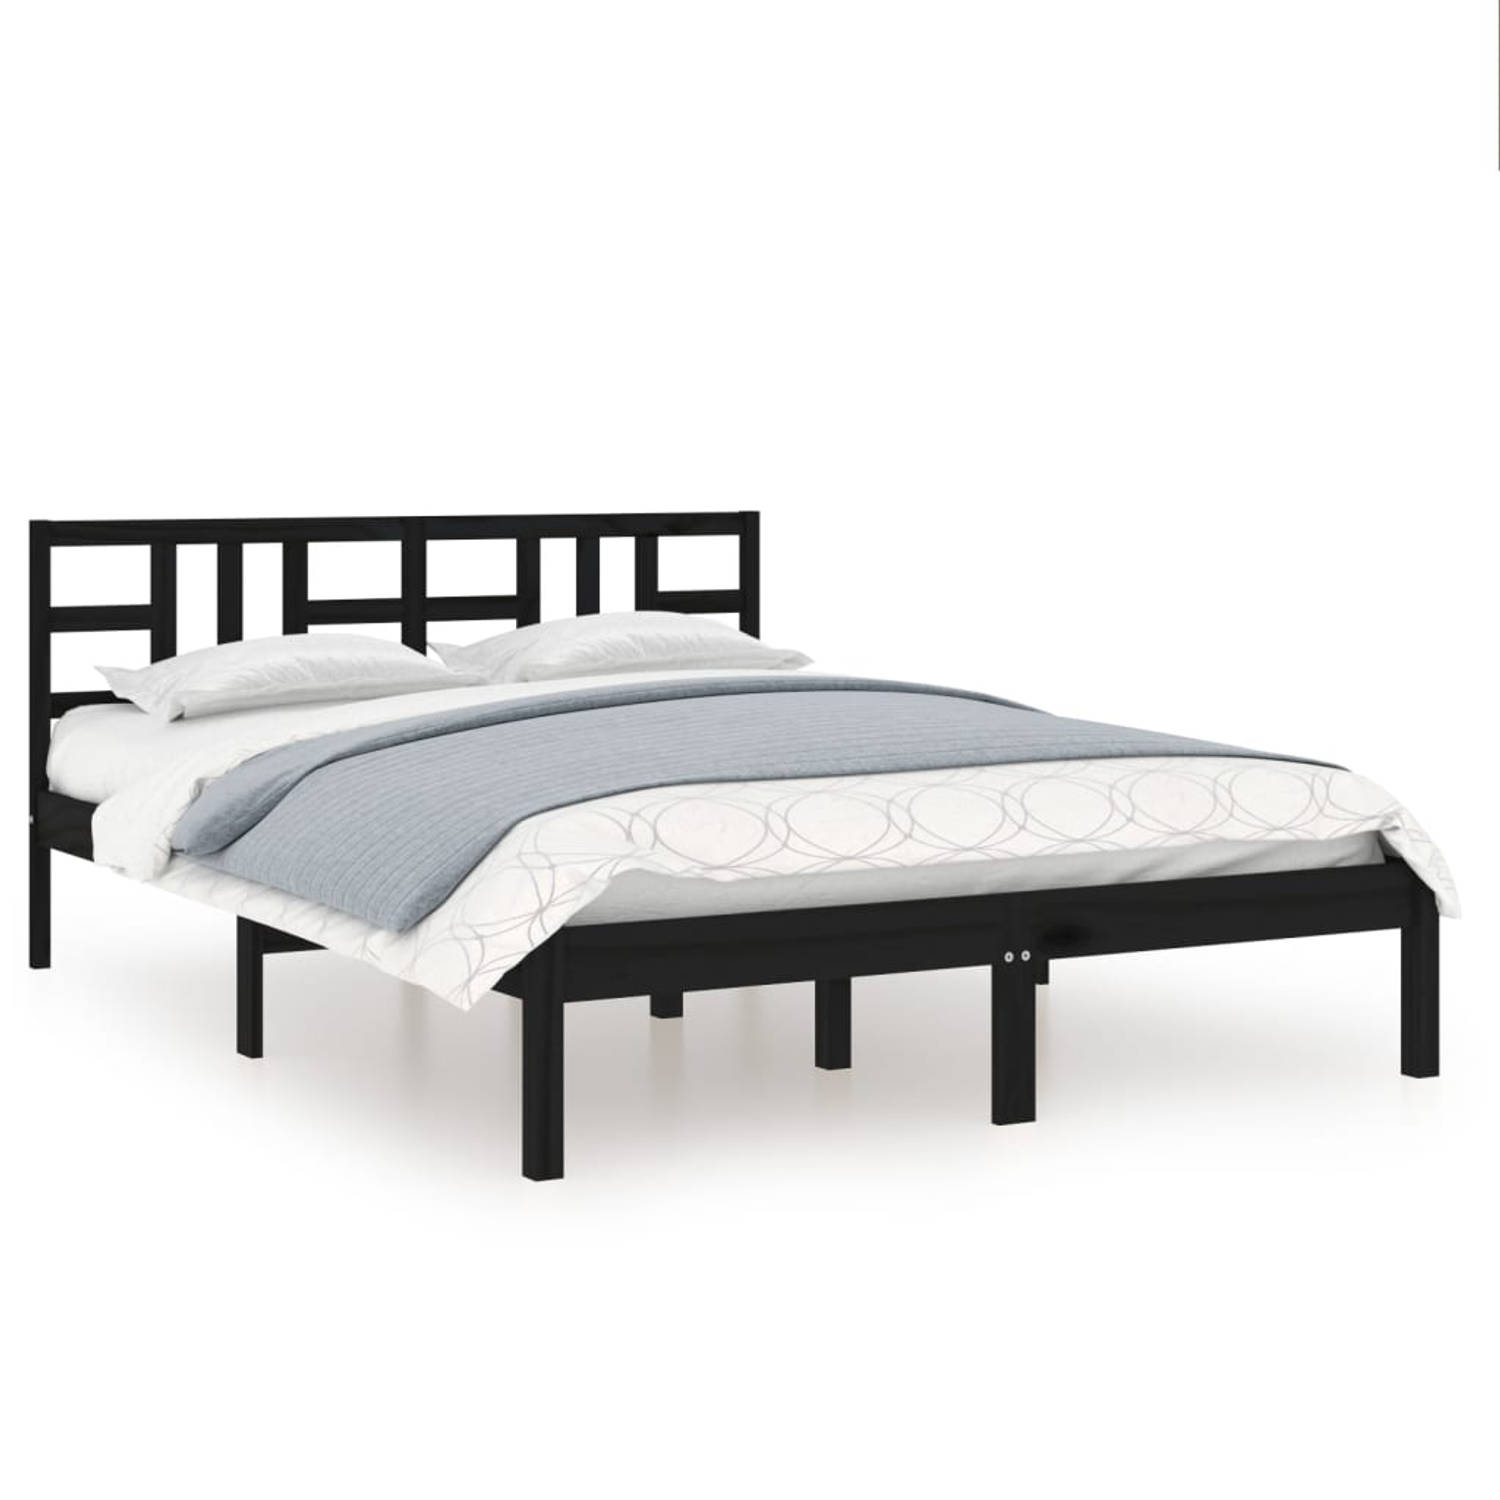 The Living Store Bedframe massief hout zwart 140x190 cm - Bedframe - Bedframes - Tweepersoonsbed - Bed - Bedombouw - Dubbel Bed - Frame - Bed Frame - Ledikant - Houten Bedframe - T